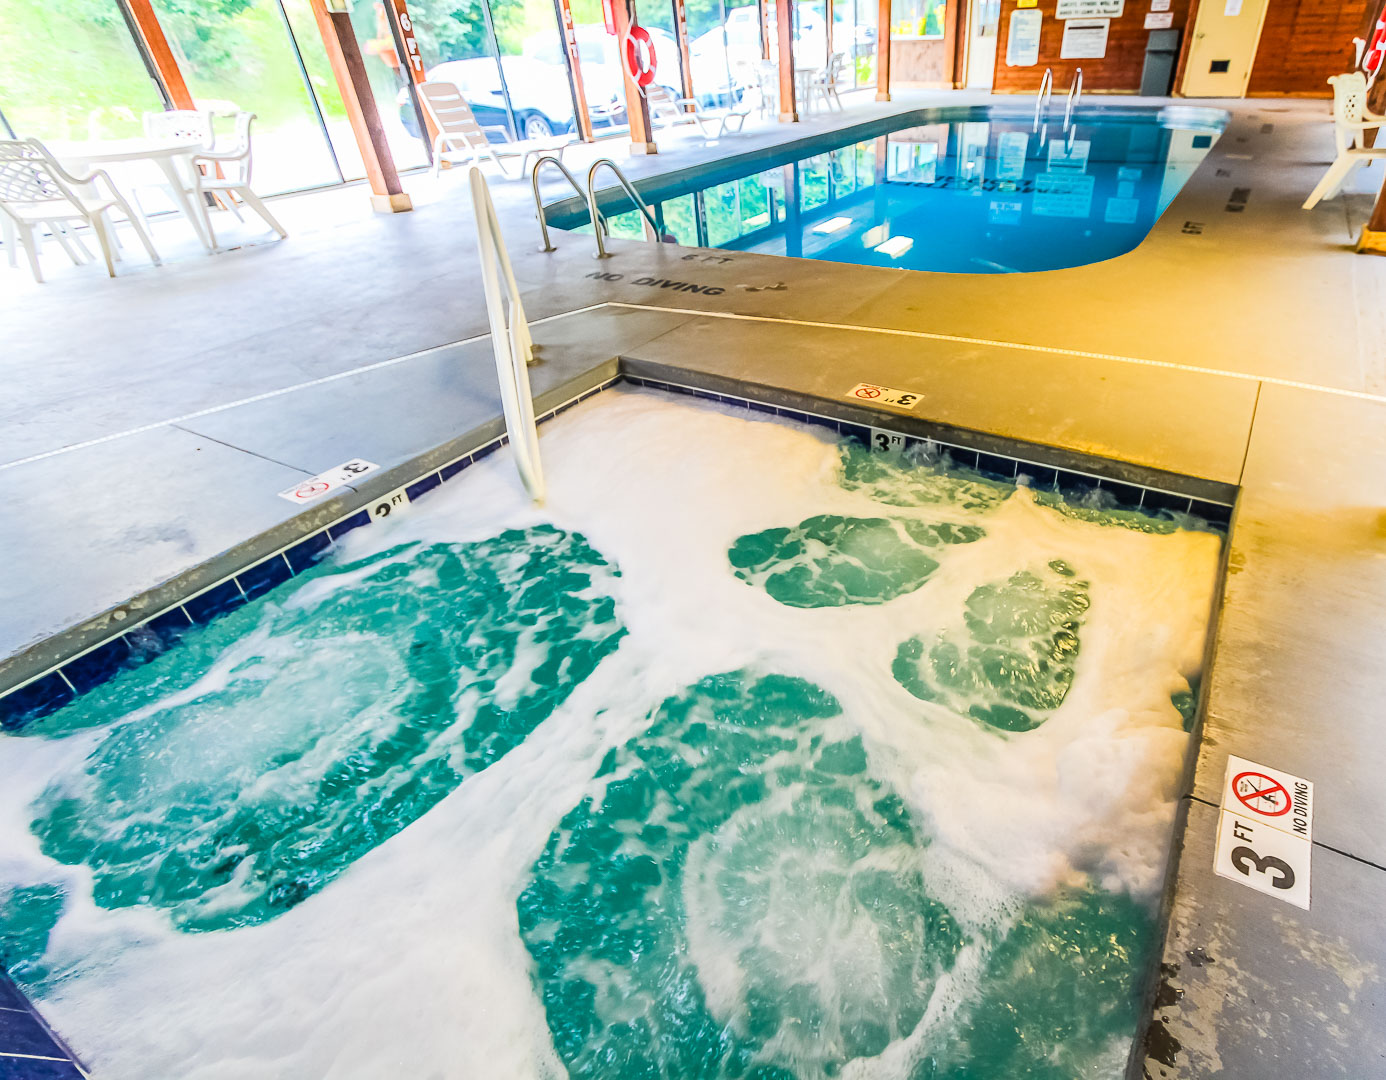 An indoor swimming pool and Jacuzzi at VRI's Smoketree Lodge in North Carolina.